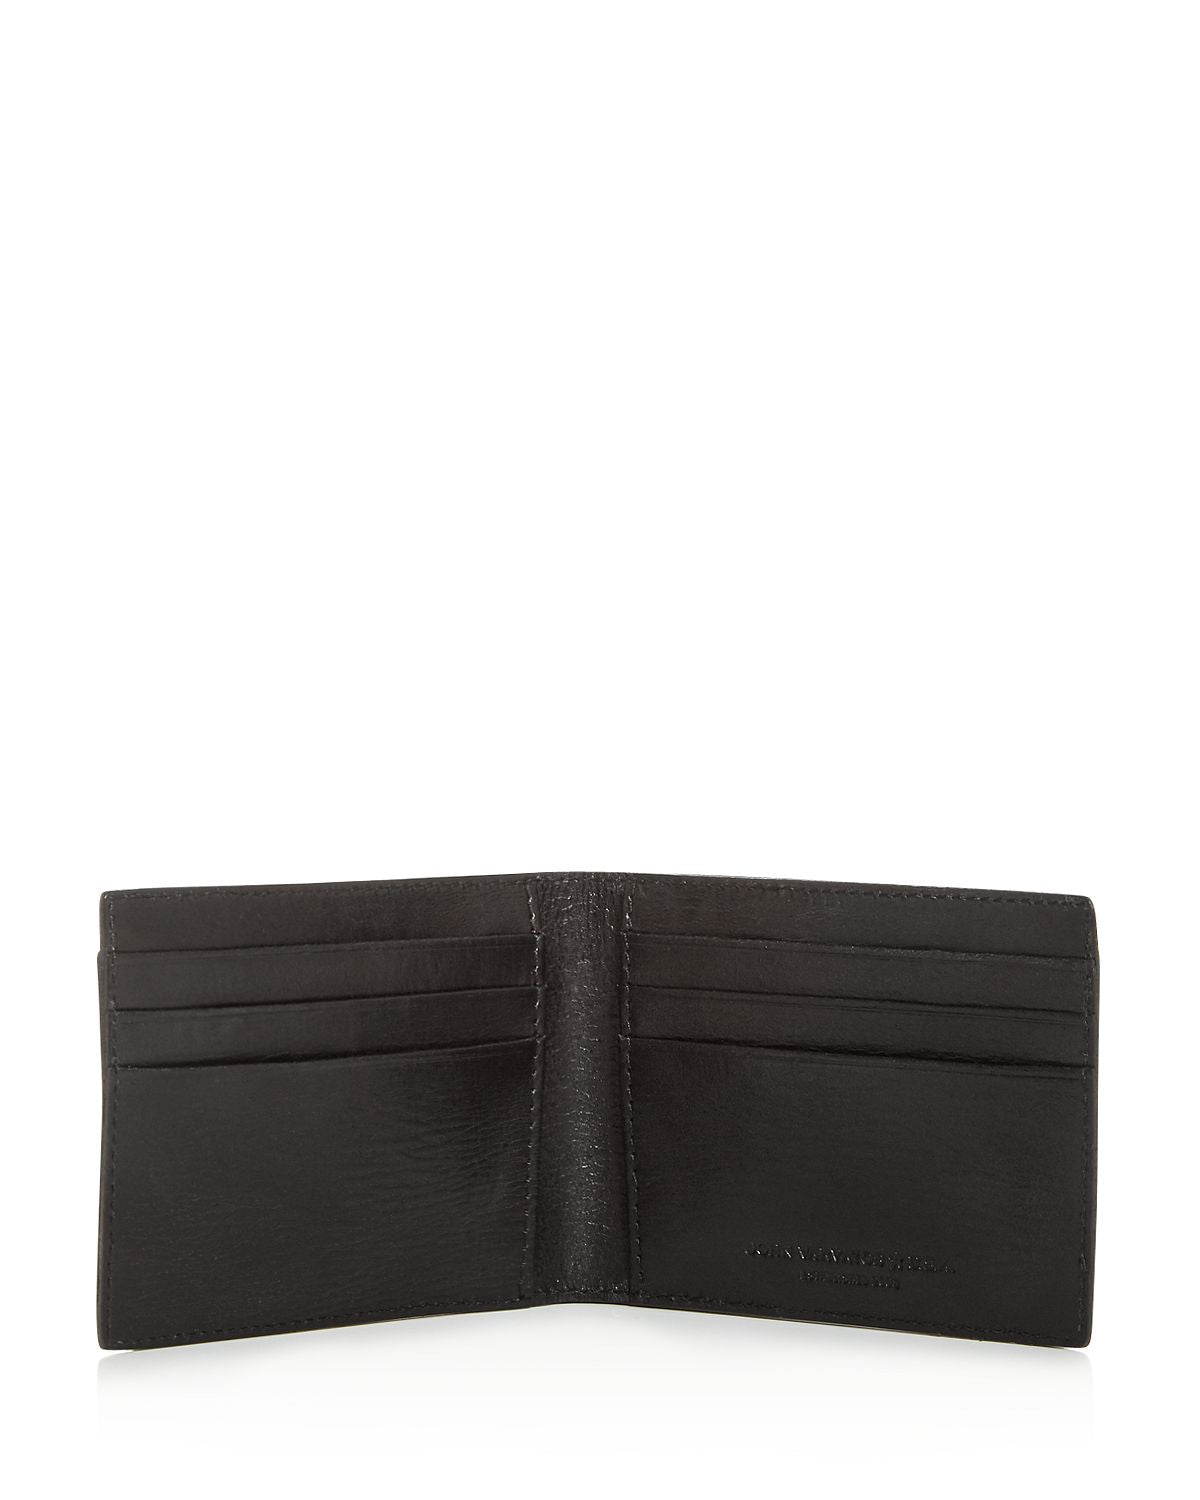 John Varvatos Star Usa Cooper Leather Bi-fold Wallet Black